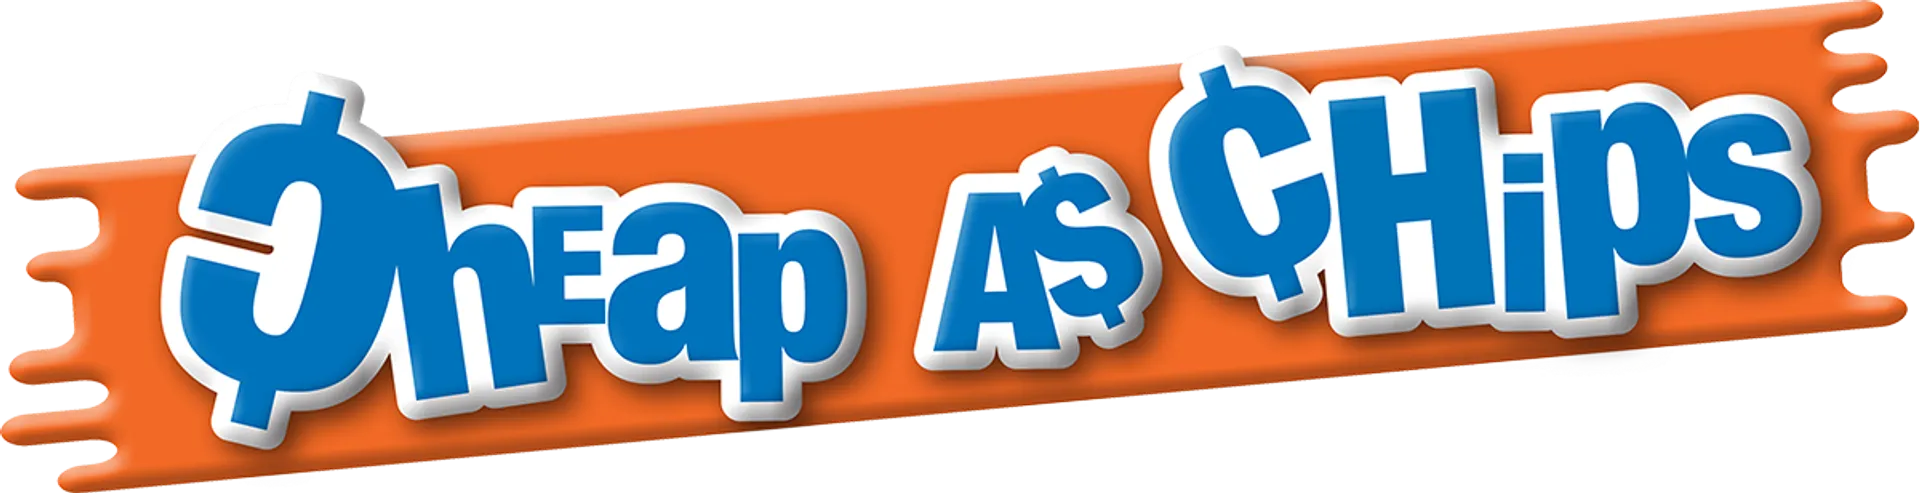 CHEAP AS CHIPS logo